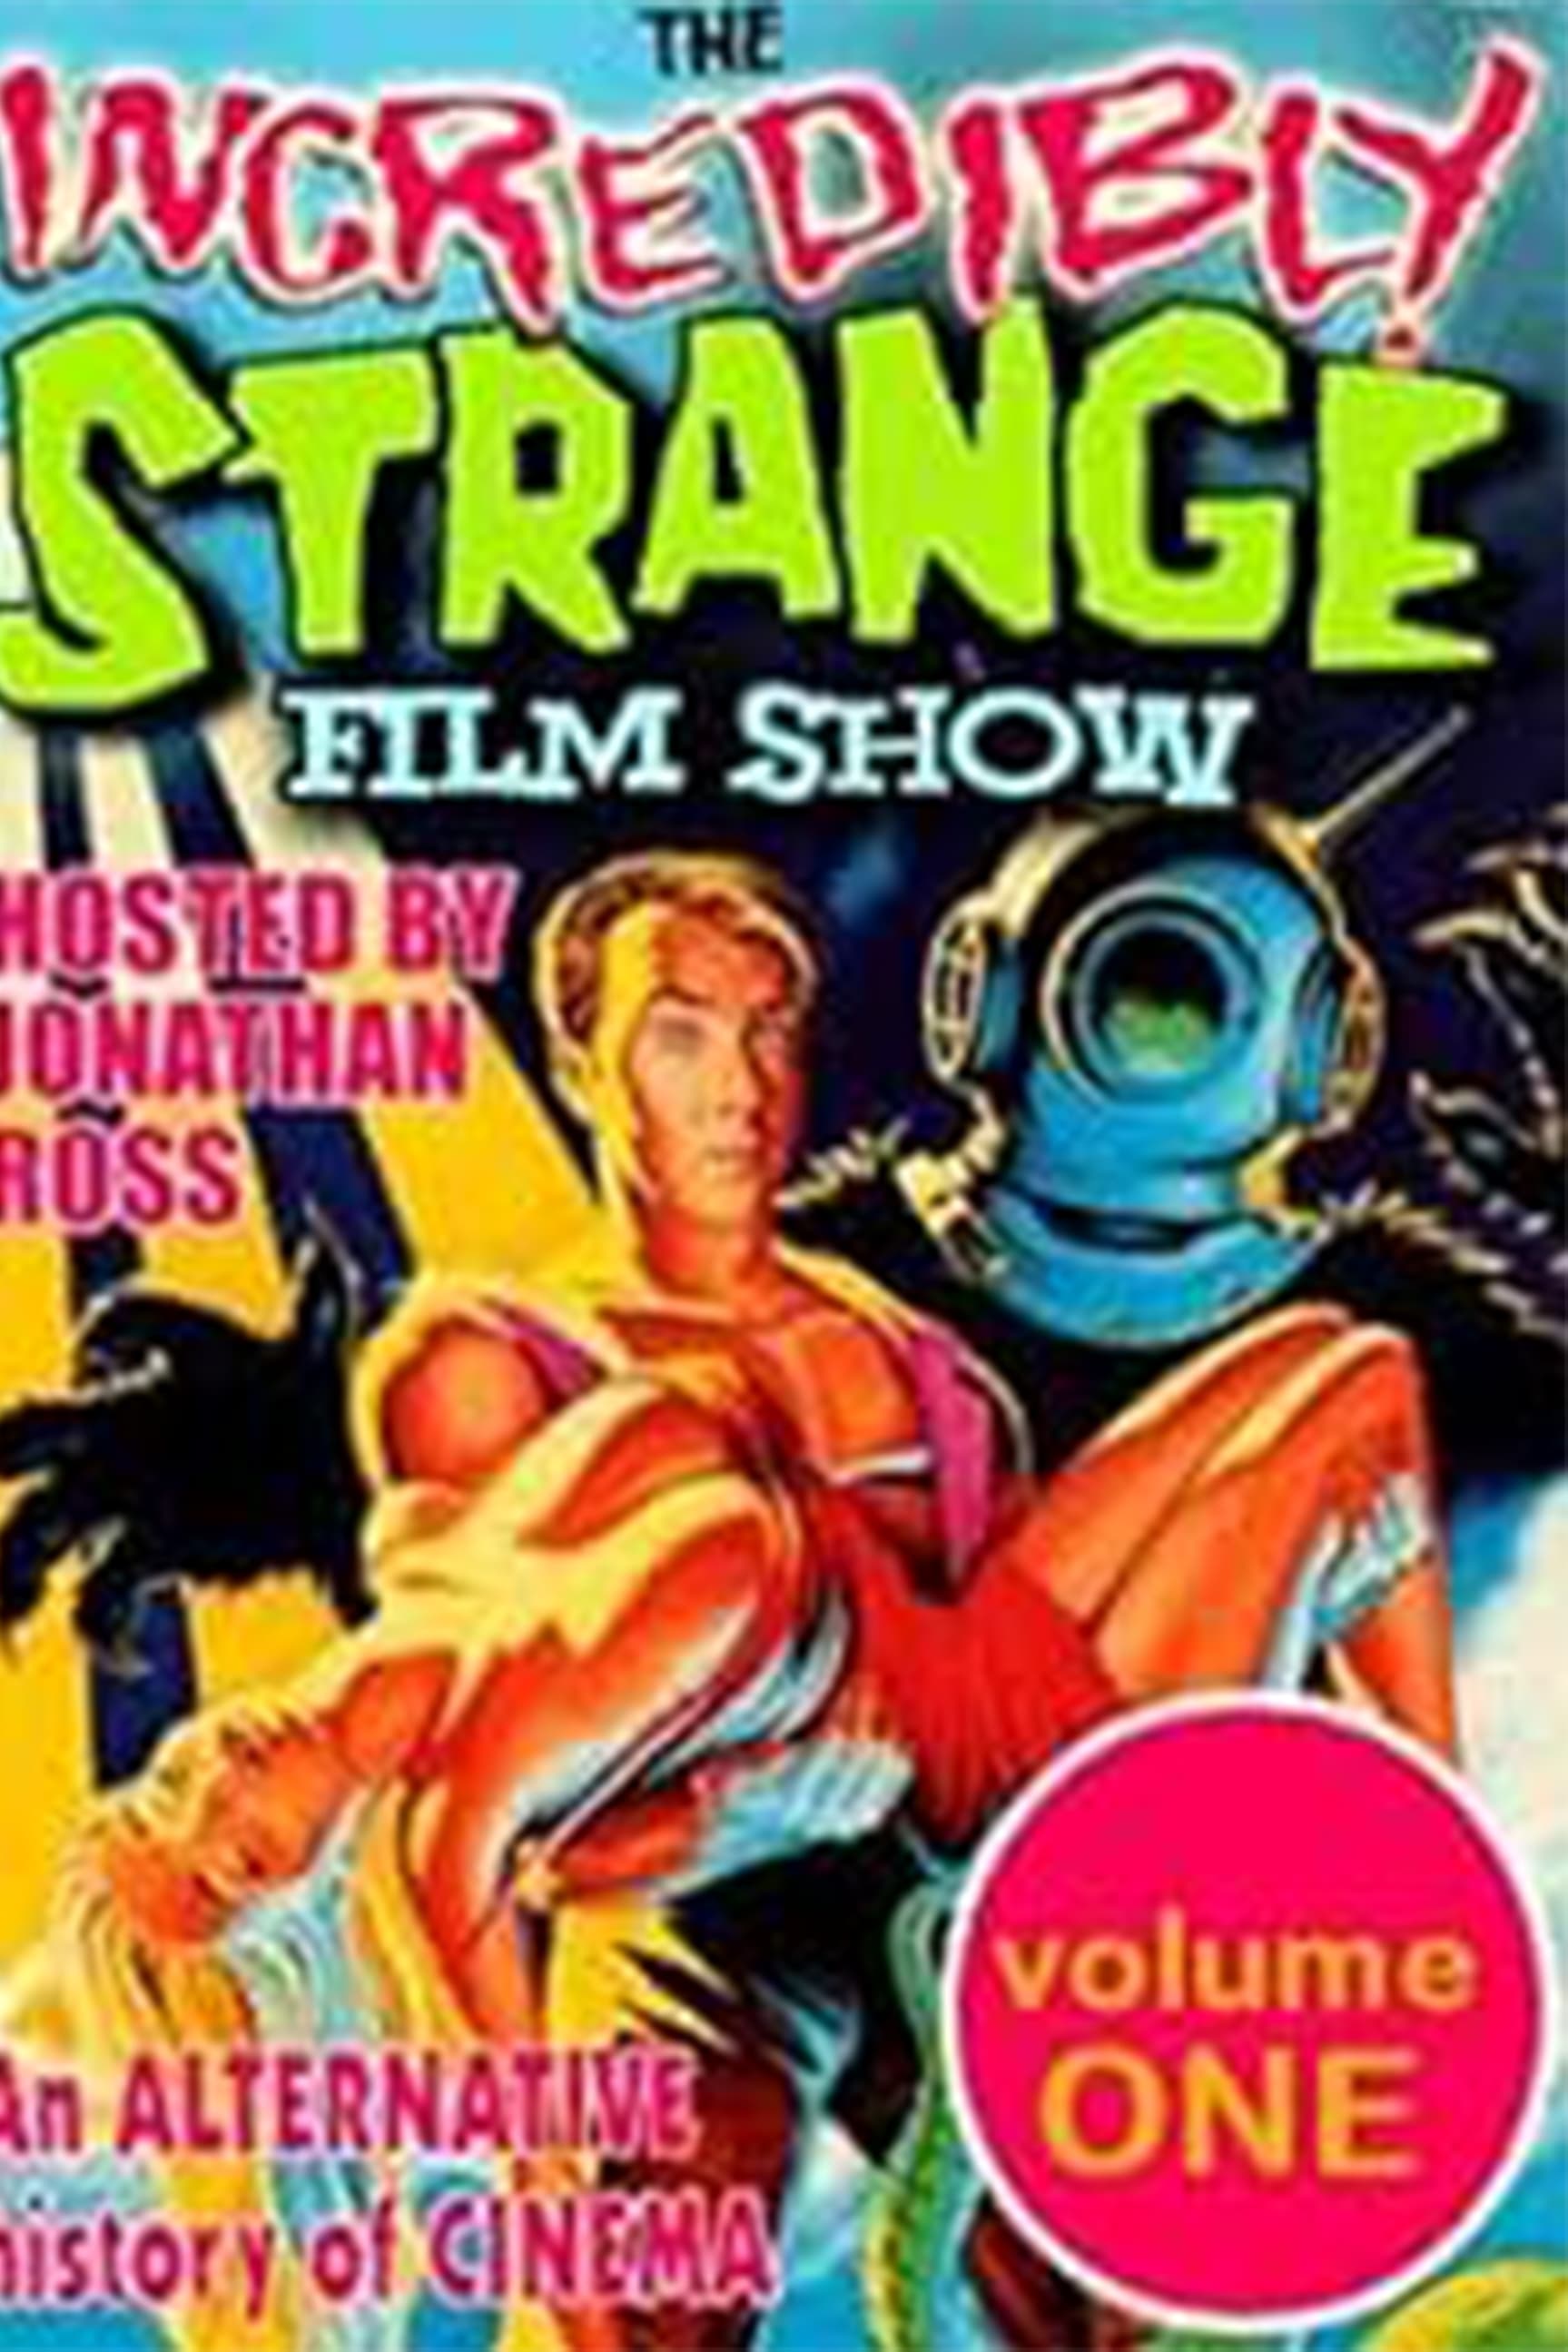 The Incredibly Strange Film Show: Ed Wood Jr.